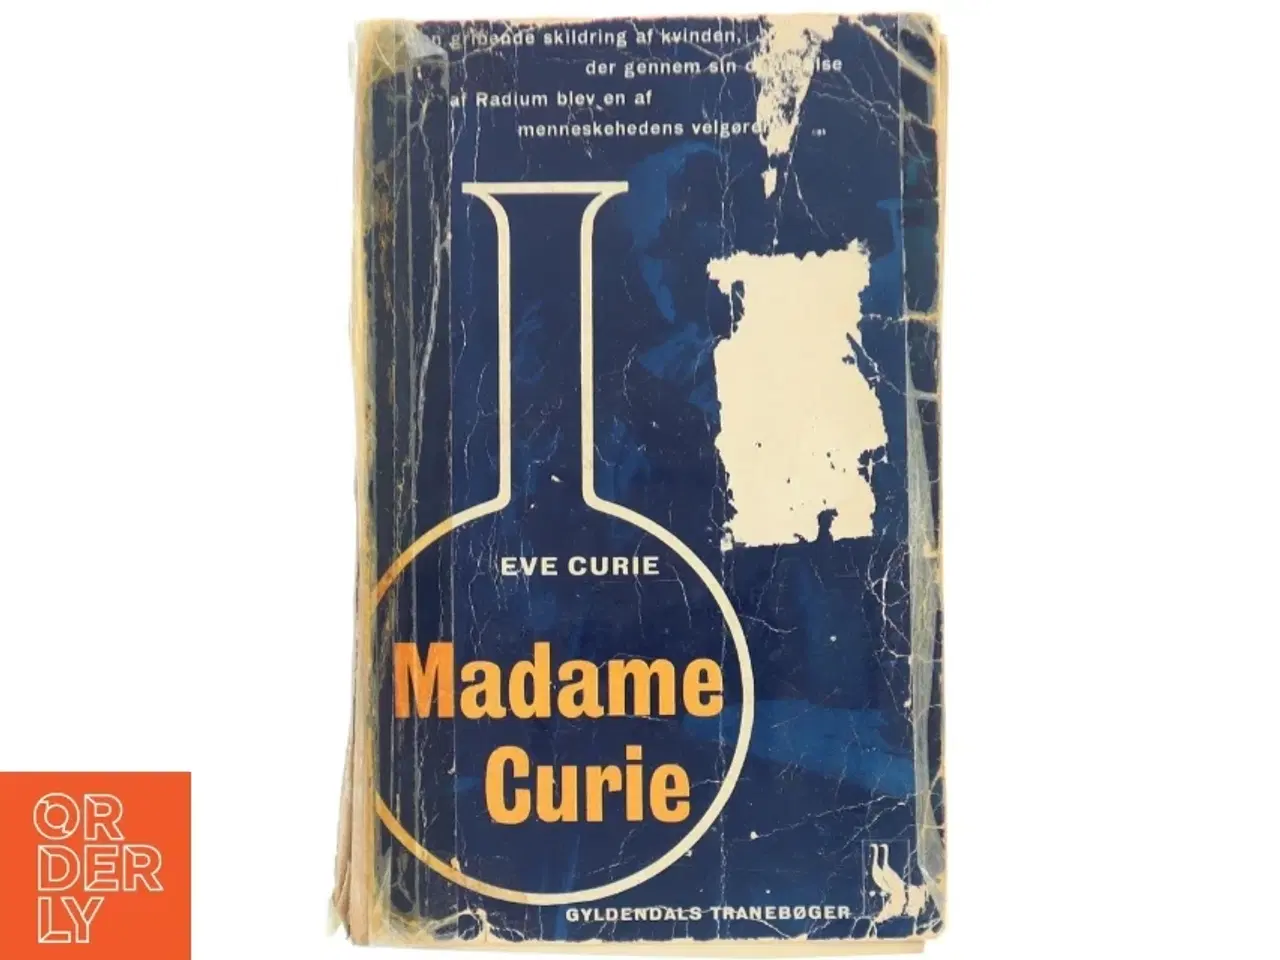 Billede 1 - Biografi om Madame Curie